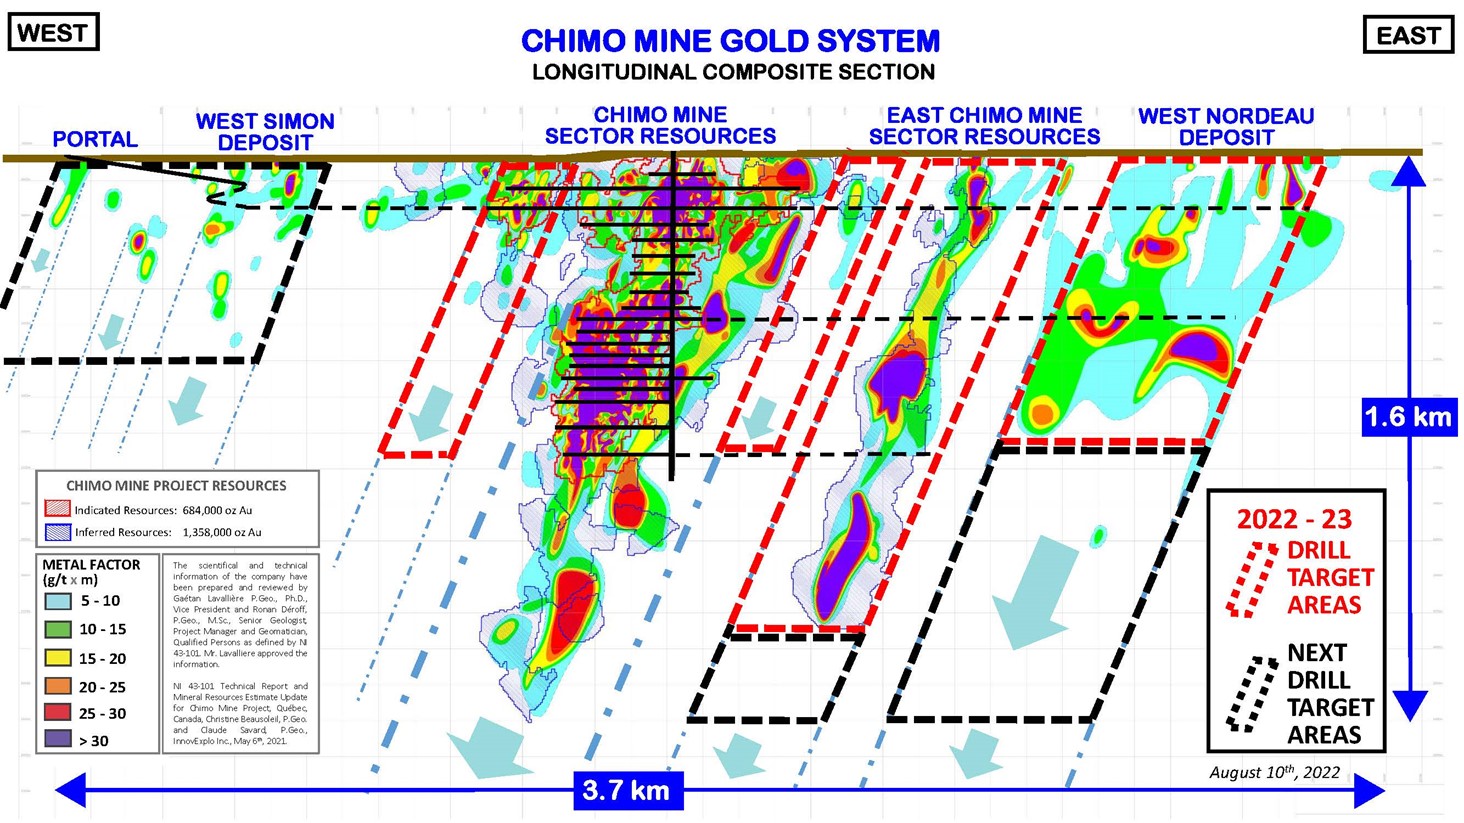 Chimo Mine Gold System - Longitudinal Composite Section